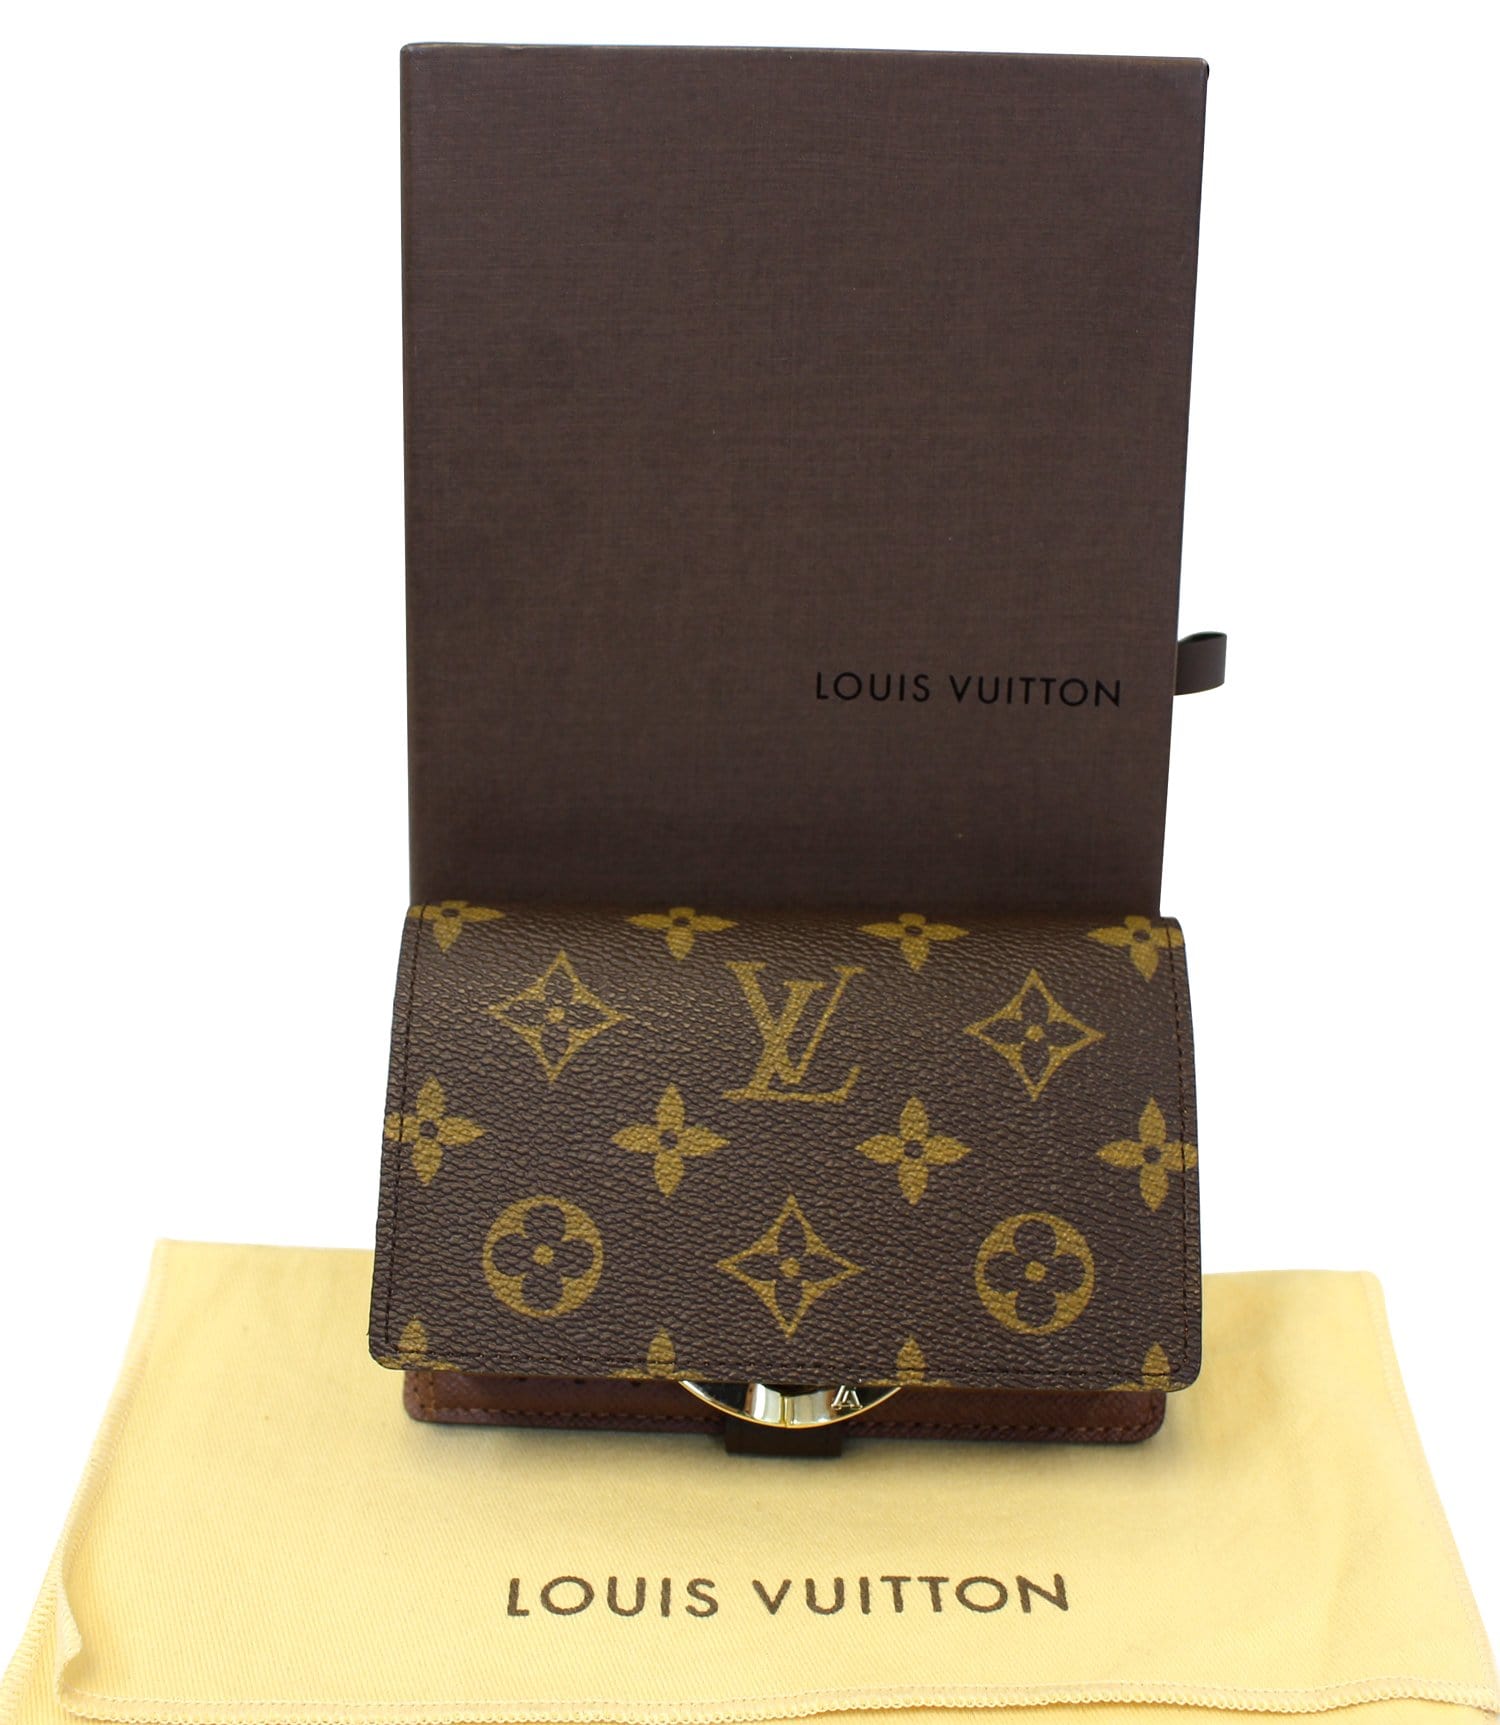 Louis Vuitton Authentic Monogram French Kisslock Wallet - $202 - From Vonna